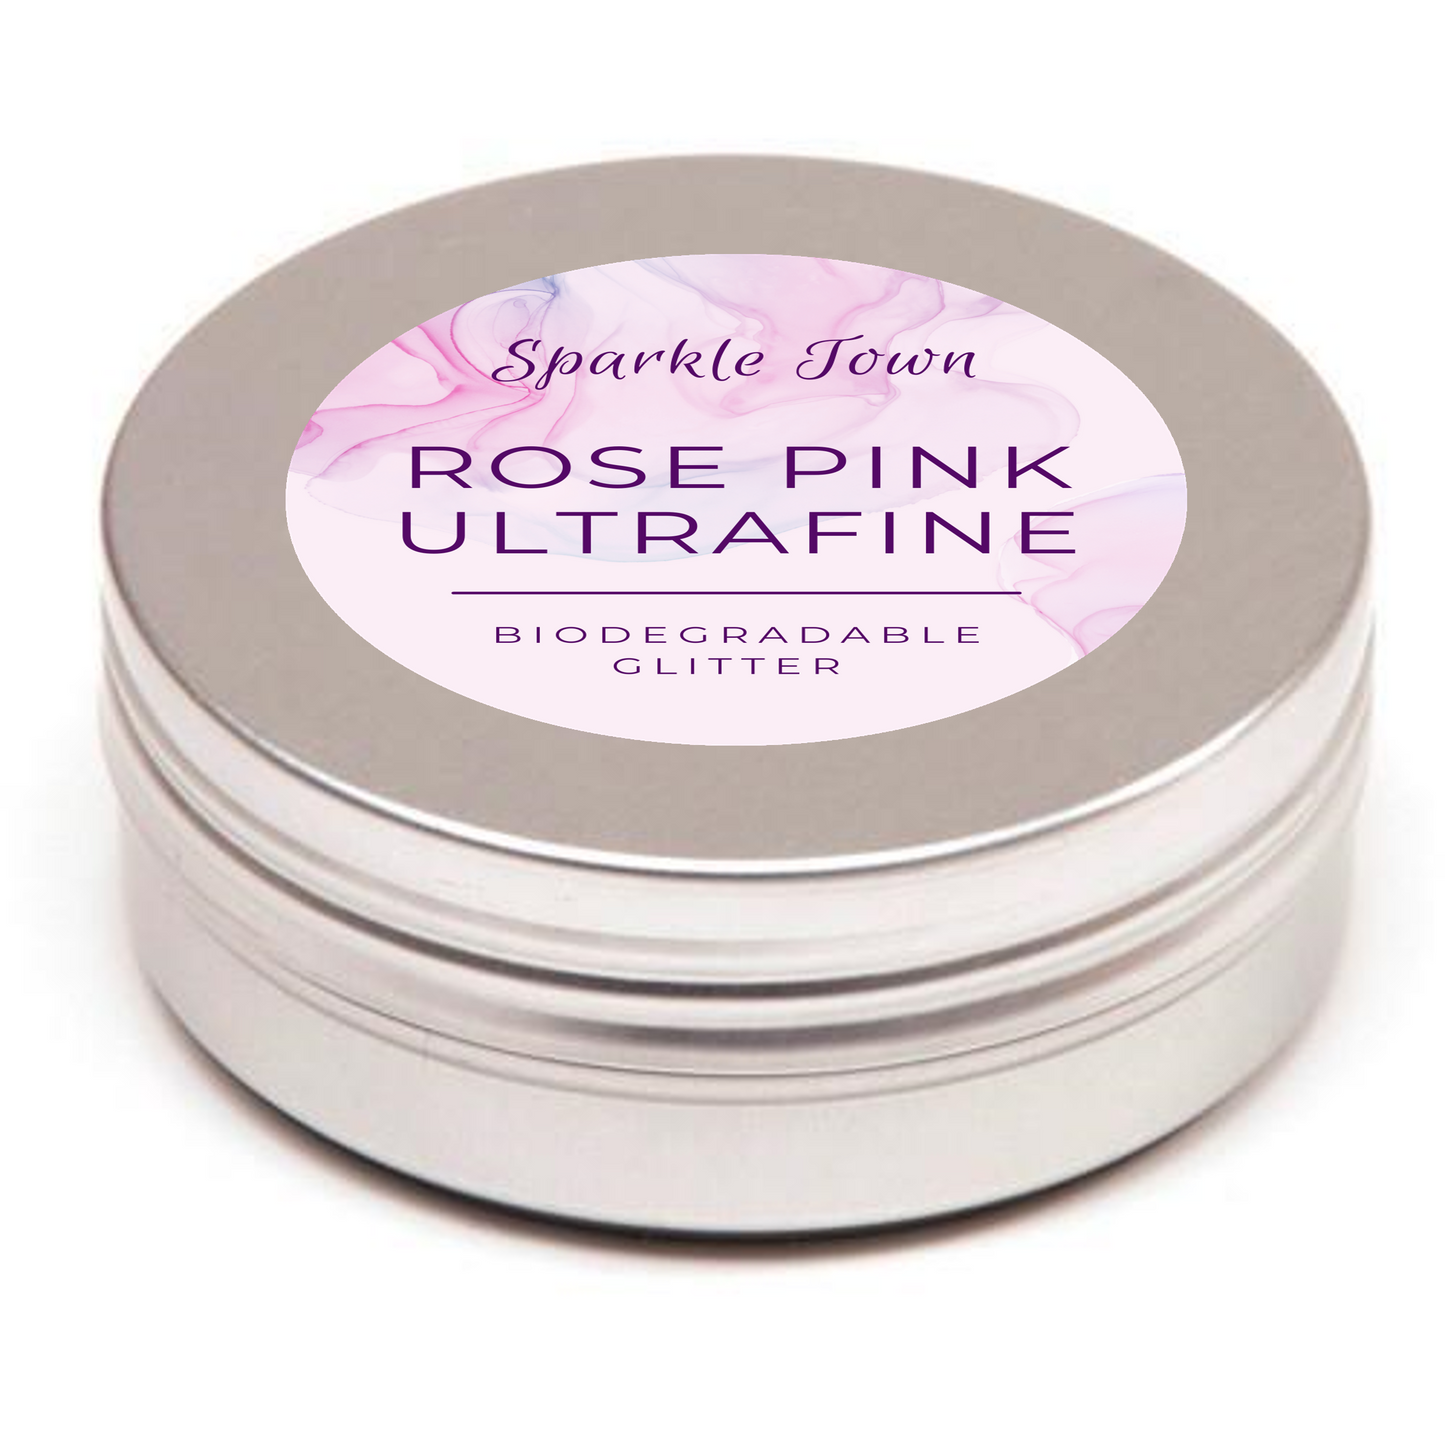 Rose Pink Ultrafine Biodegradable Glitter